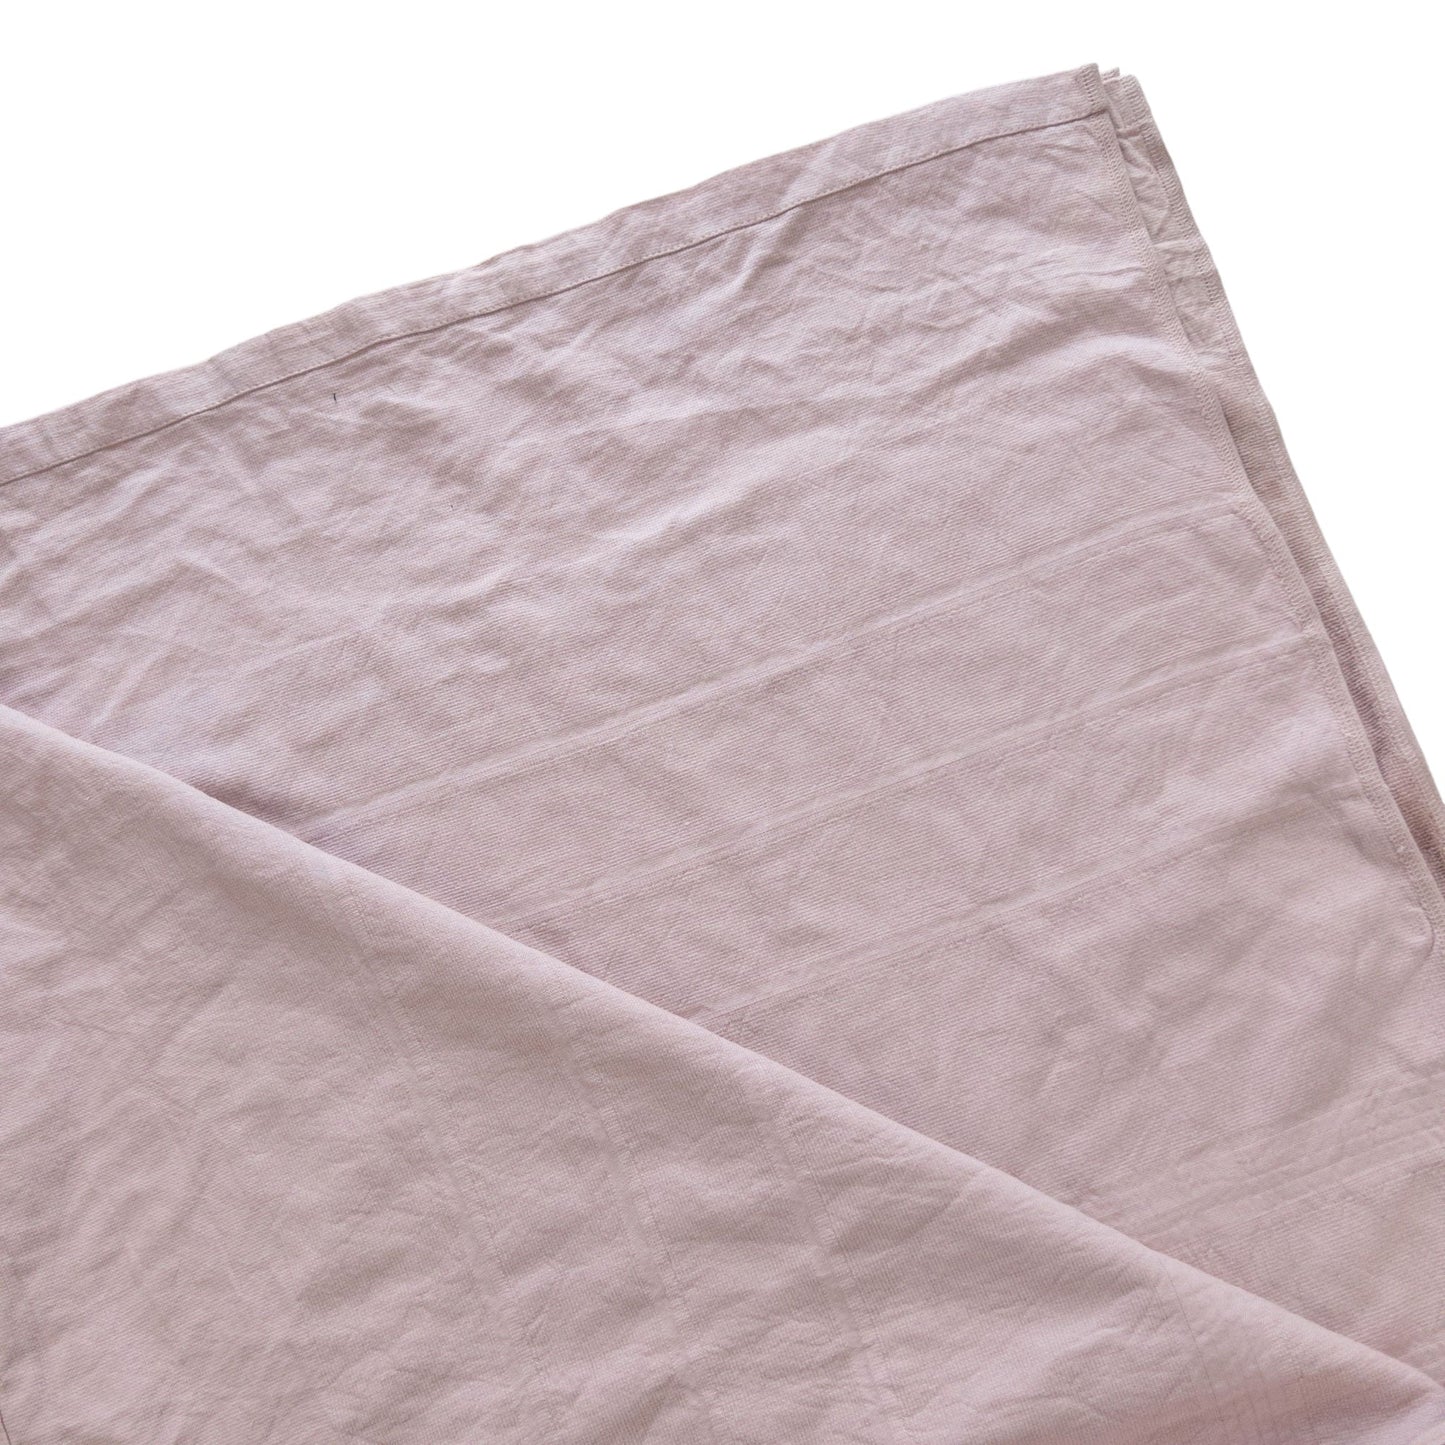 Vintage YSL Yves Saint Laurent Large Towel